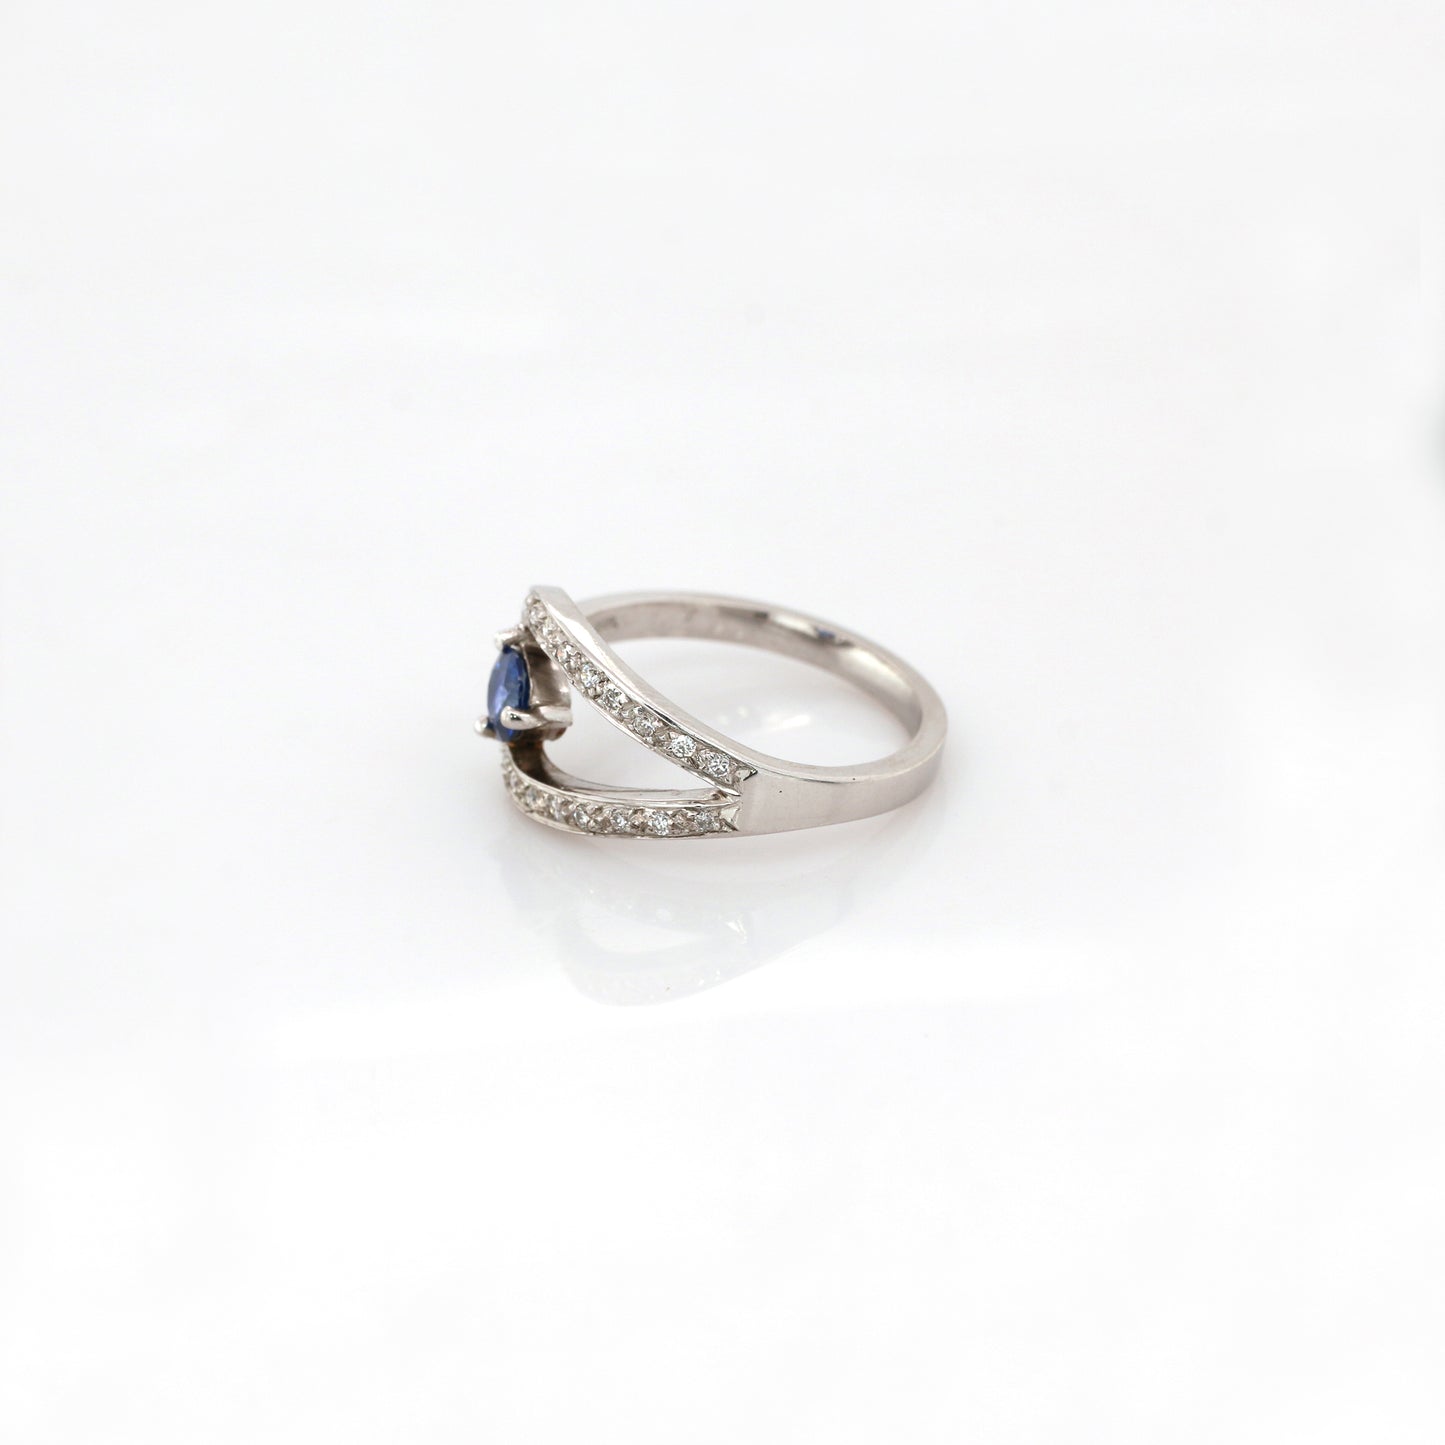 Blue Sapphire & Diamond Ring - 18K White Gold  4.23gm